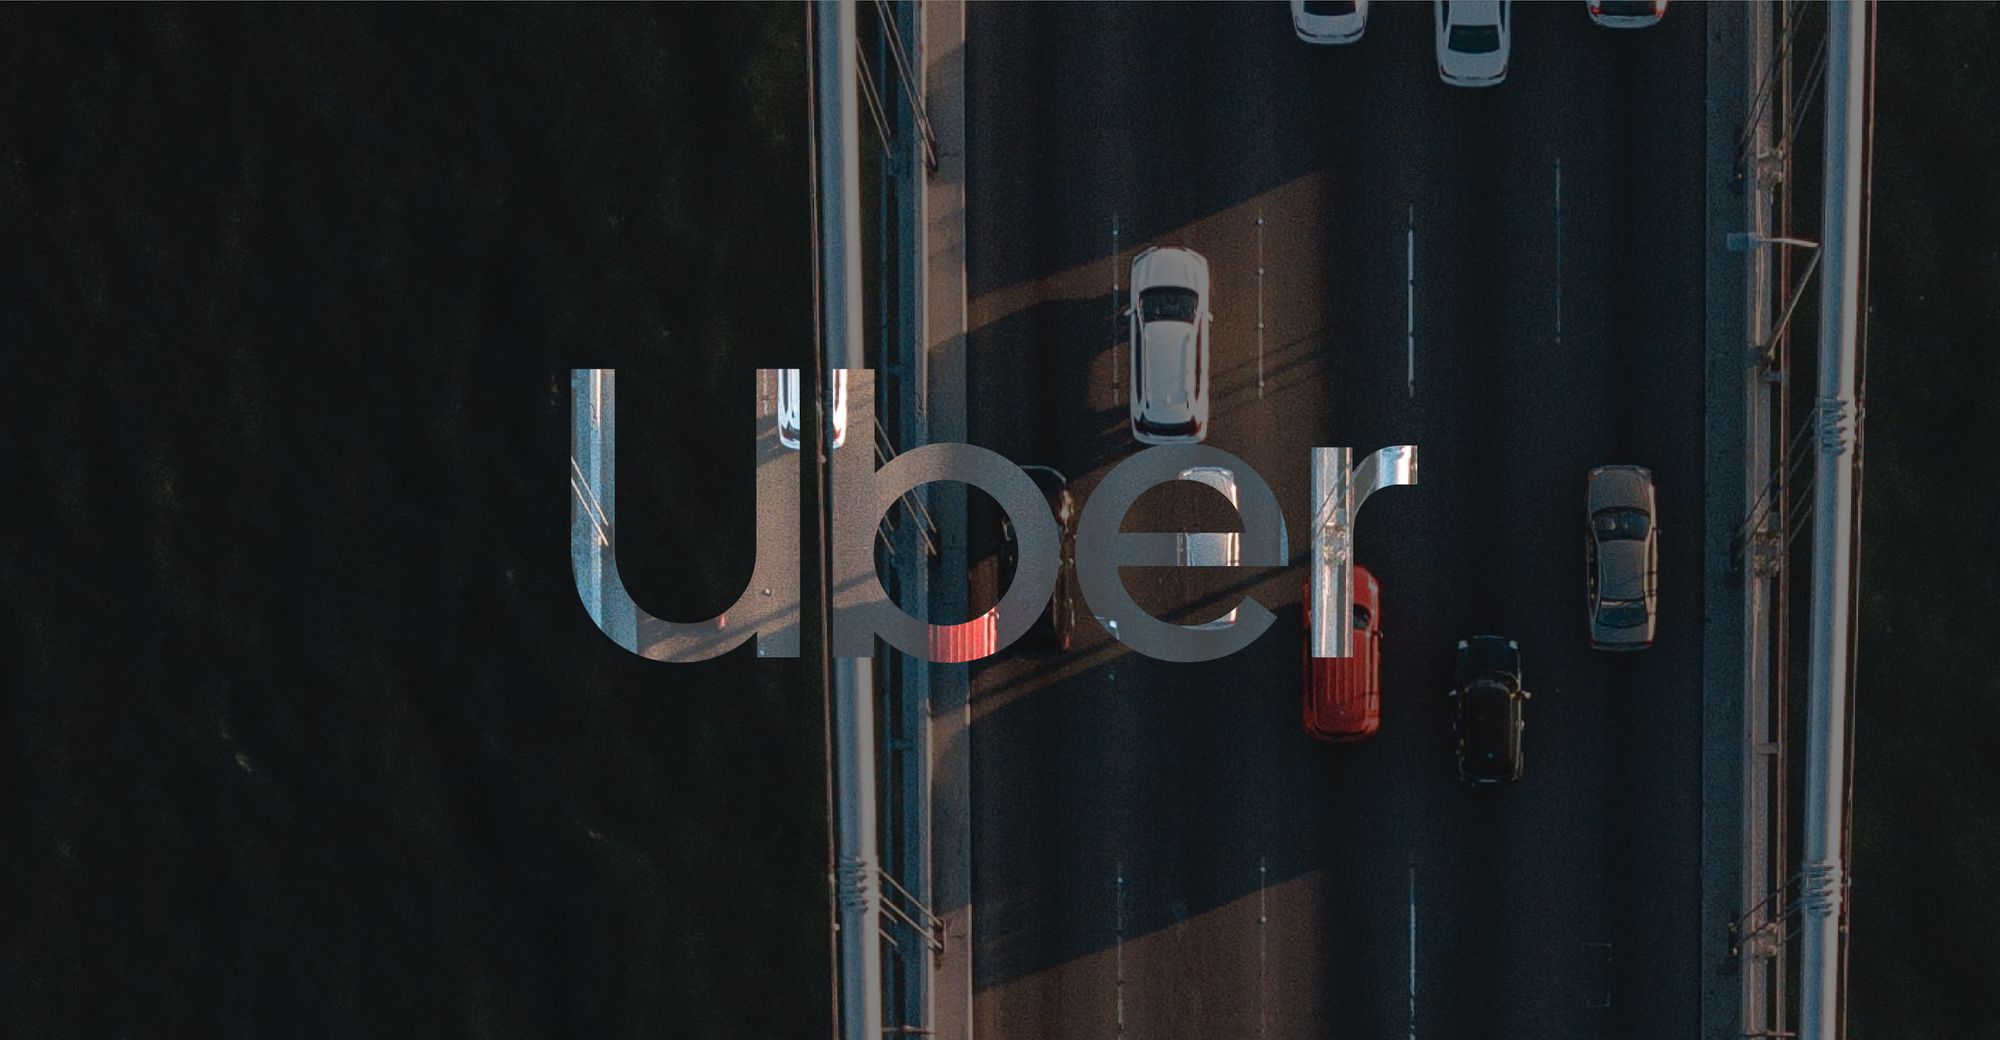                               Uber 아키텍처와 시스템 디자인
                              